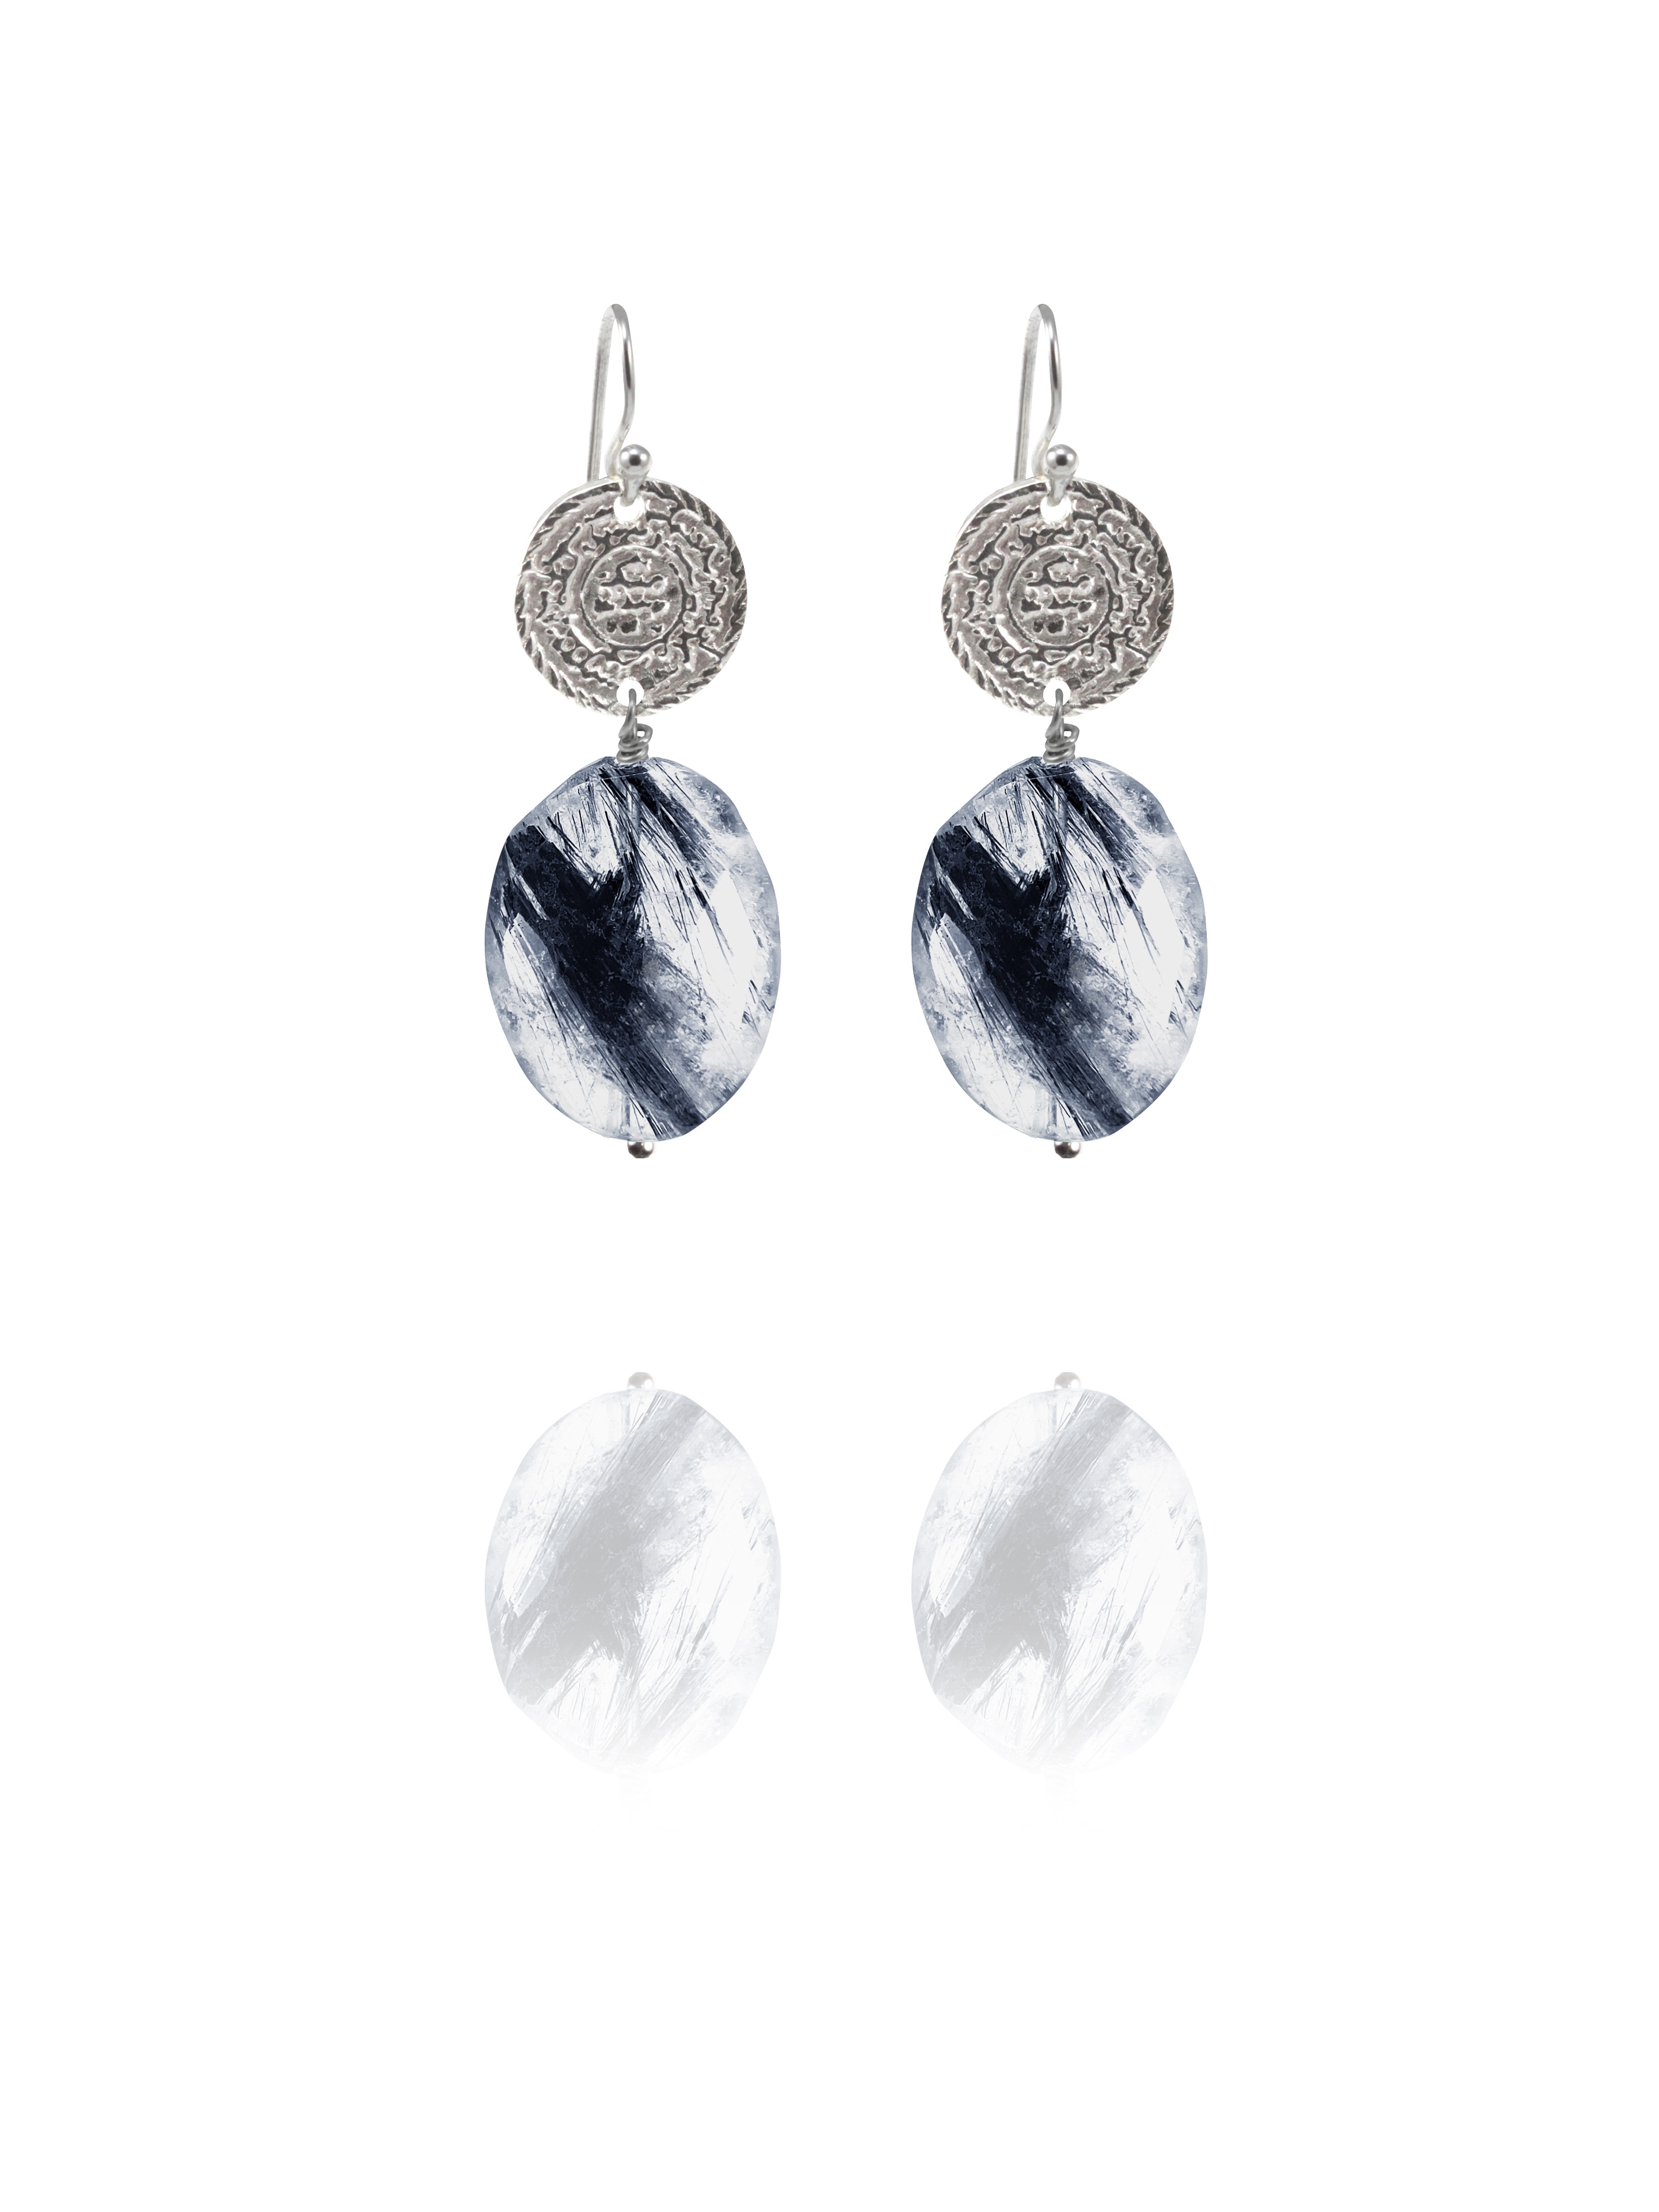 Hope black rutile quartz earrings silver S